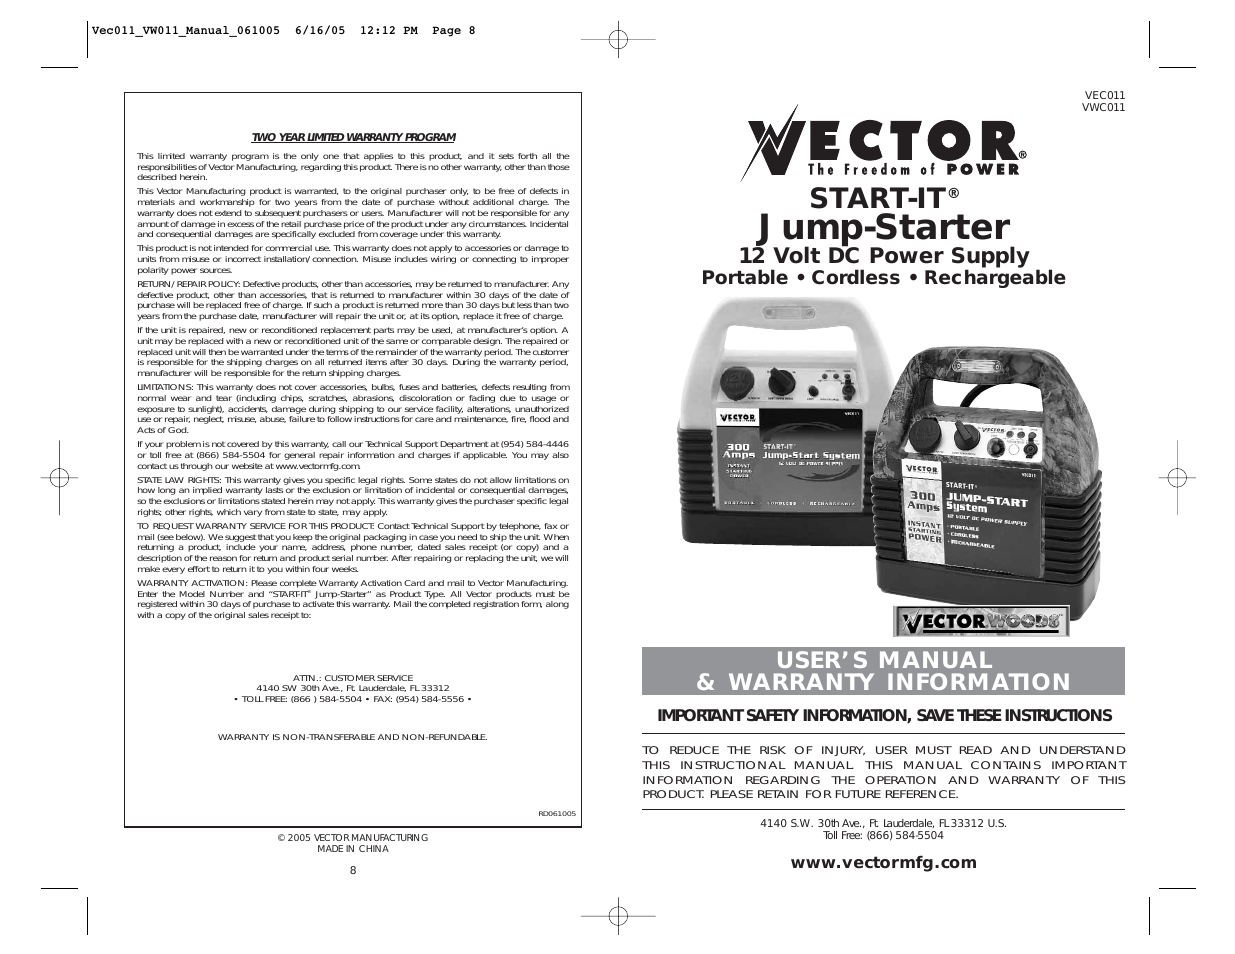 START-IT VEC011